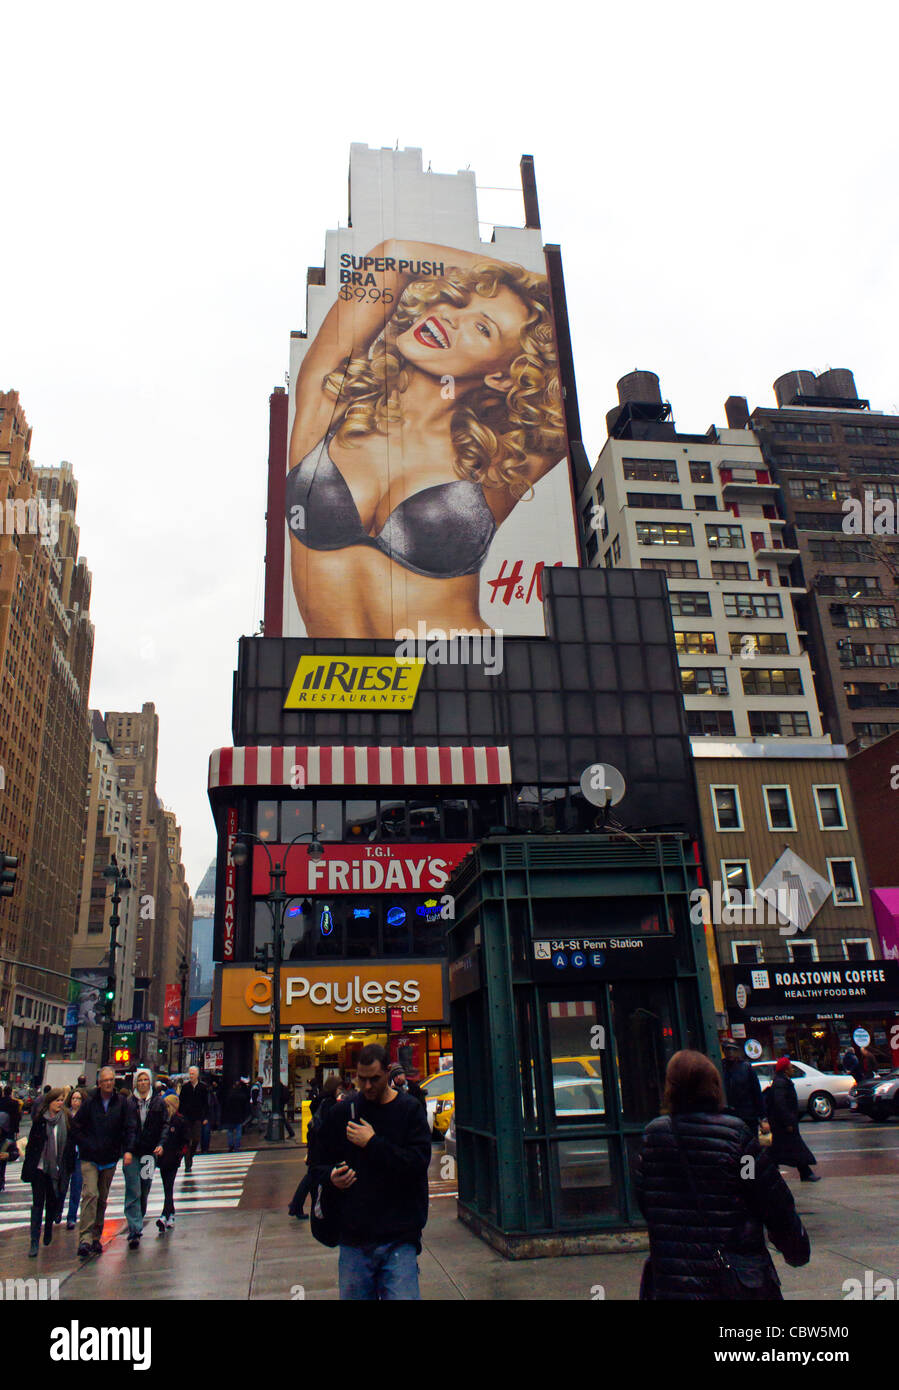 https://c8.alamy.com/comp/CBW5M0/a-billboard-for-hms-sexy-push-up-bra-in-the-herald-square-shopping-CBW5M0.jpg